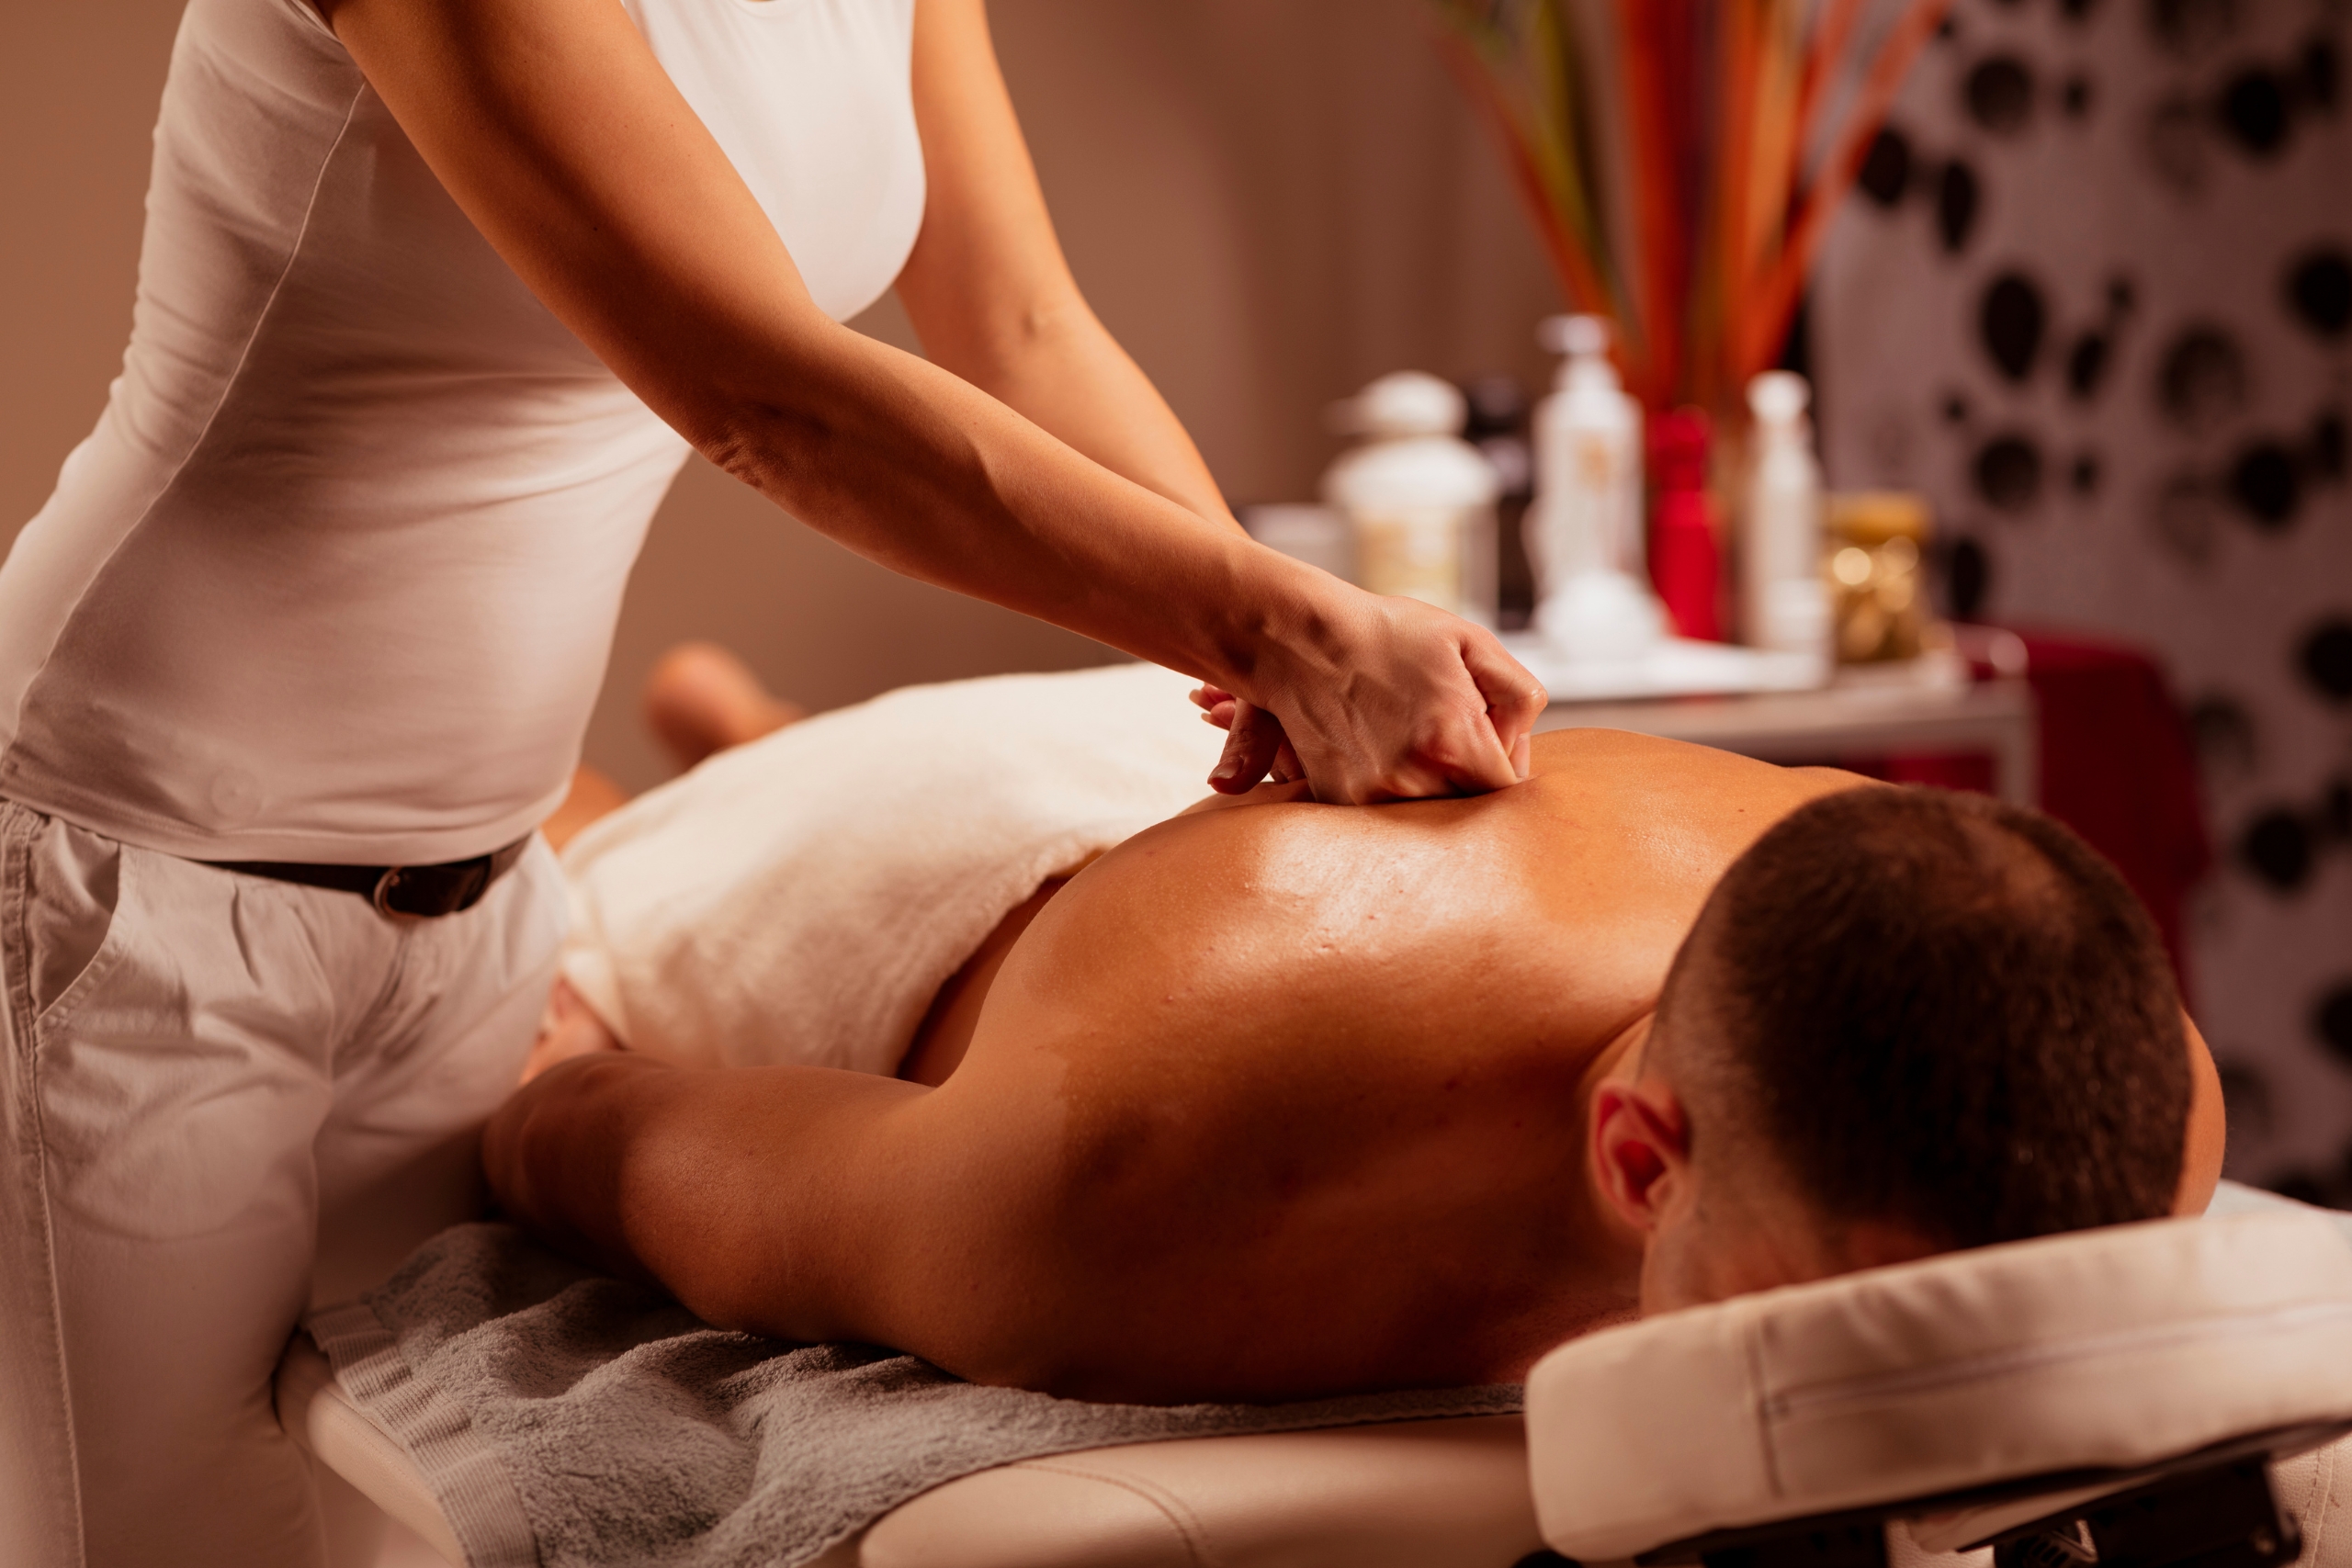 Massage Therapist woman doing healing massage. Man enjoying in relaxing massaging at health spa treatment